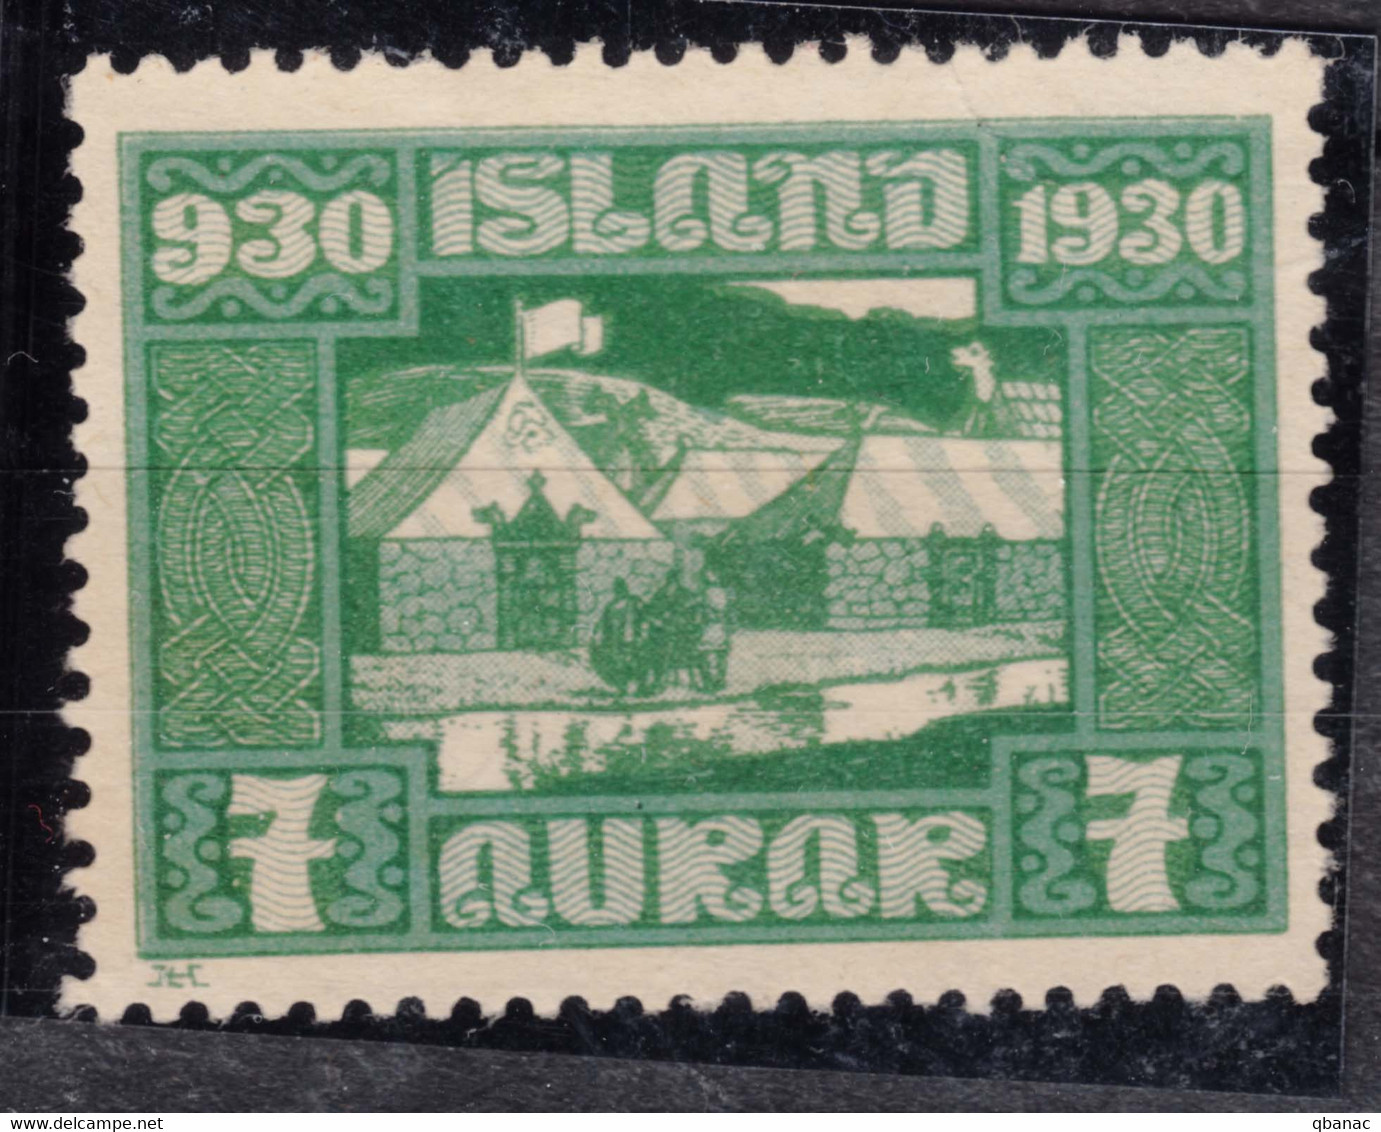 Iceland Island Ijsland 1930 Mi#127 Mint No Gum, No Hinge Mark - Nuevos